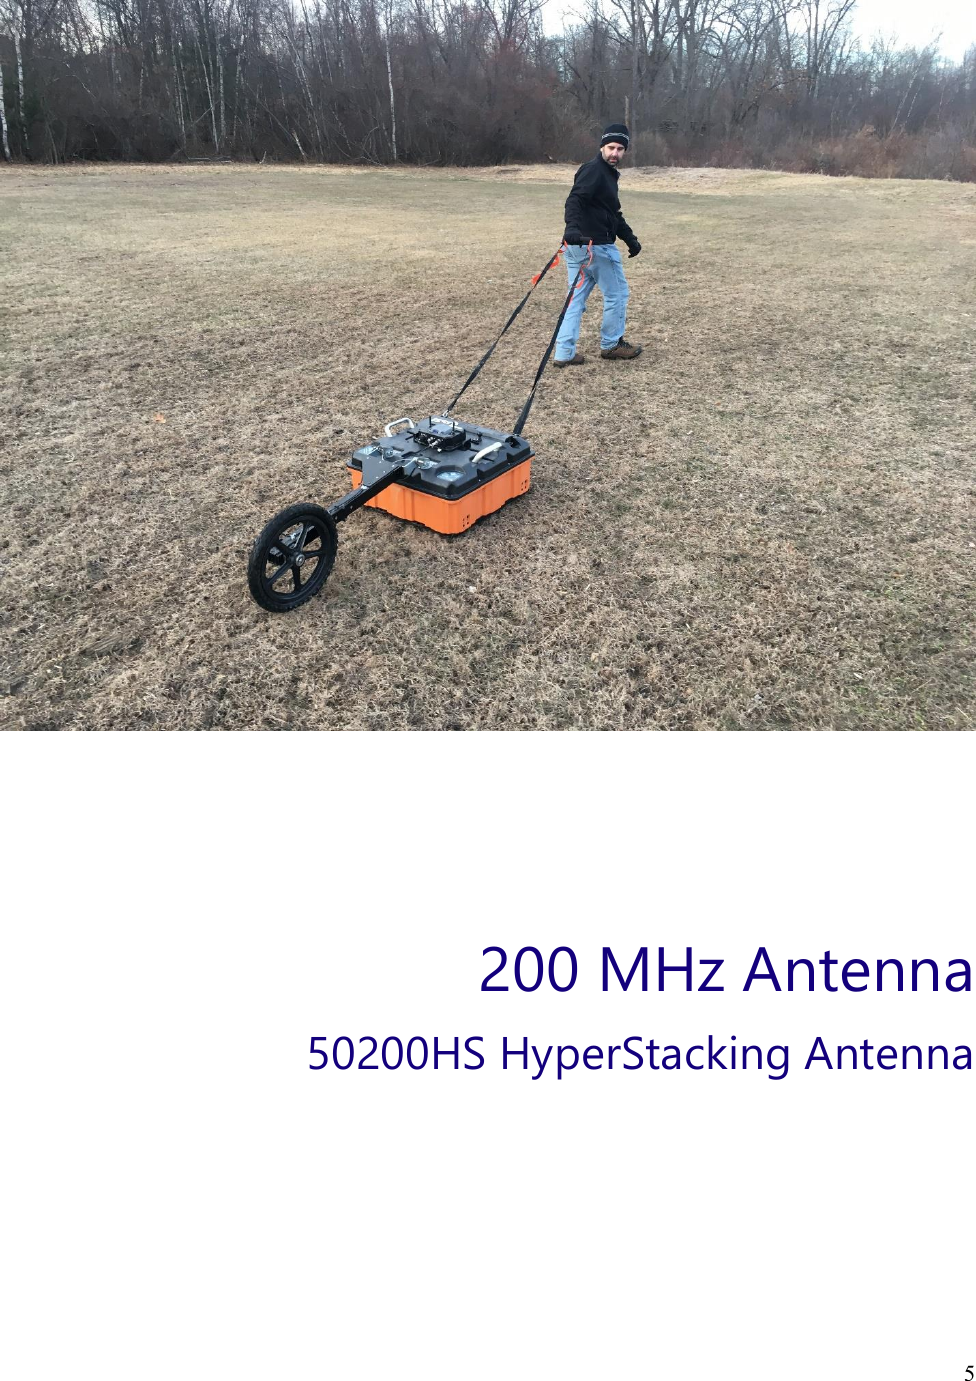  5     200 MHz Antenna 50200HS HyperStacking Antenna         